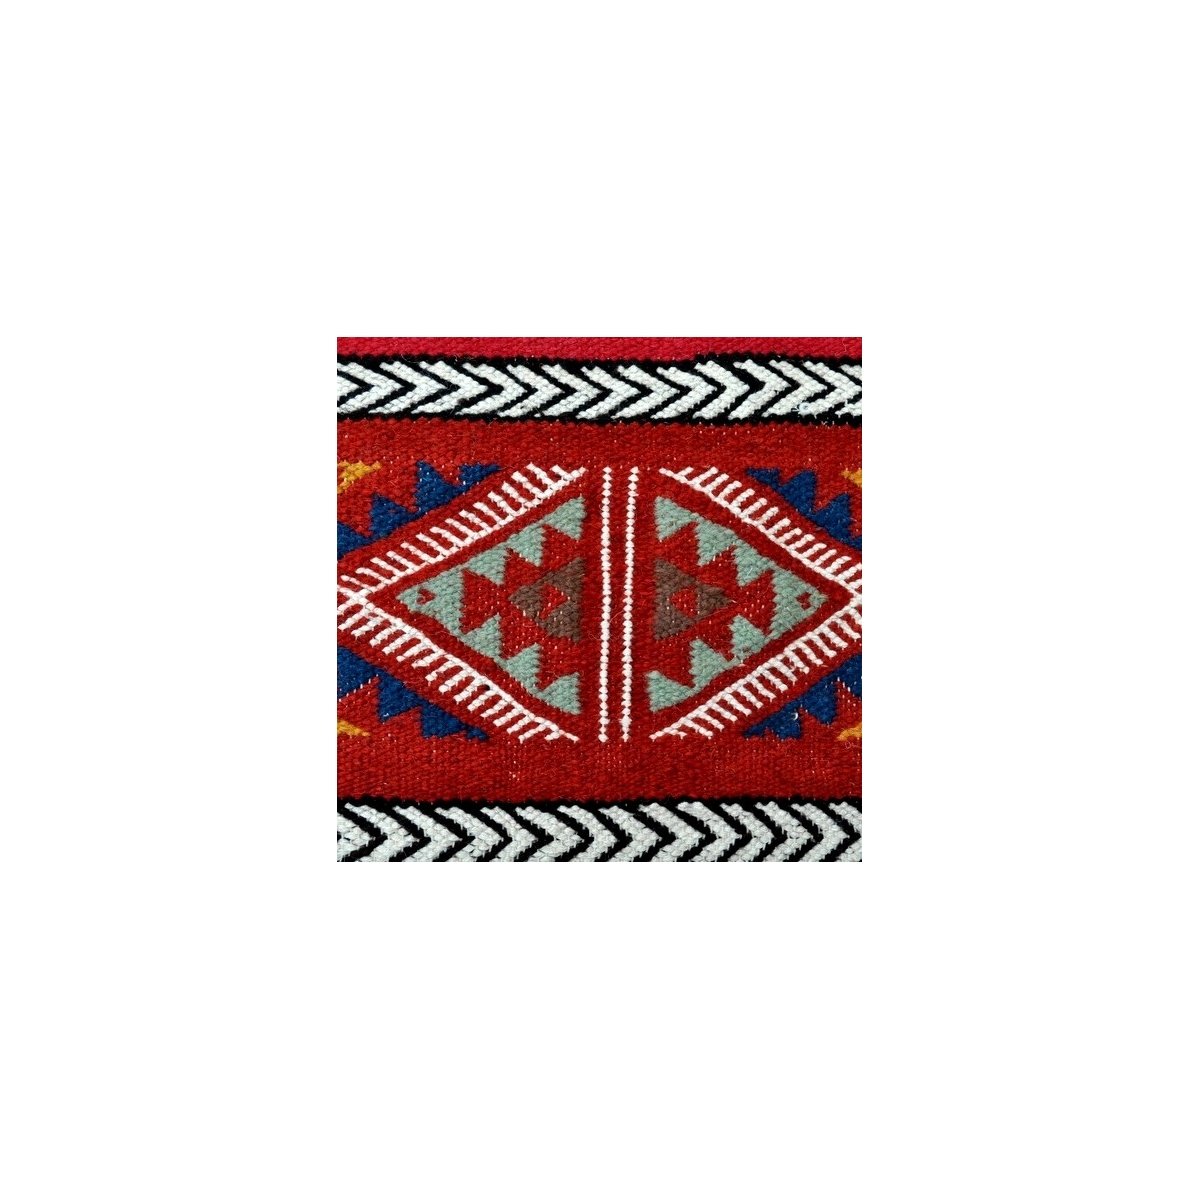 Tapis berbère Grand Tapis Kilim Monastir 105x205 Multicolore (Tissé main, Laine, Tunisie) Tapis kilim tunisien style tapis maroc